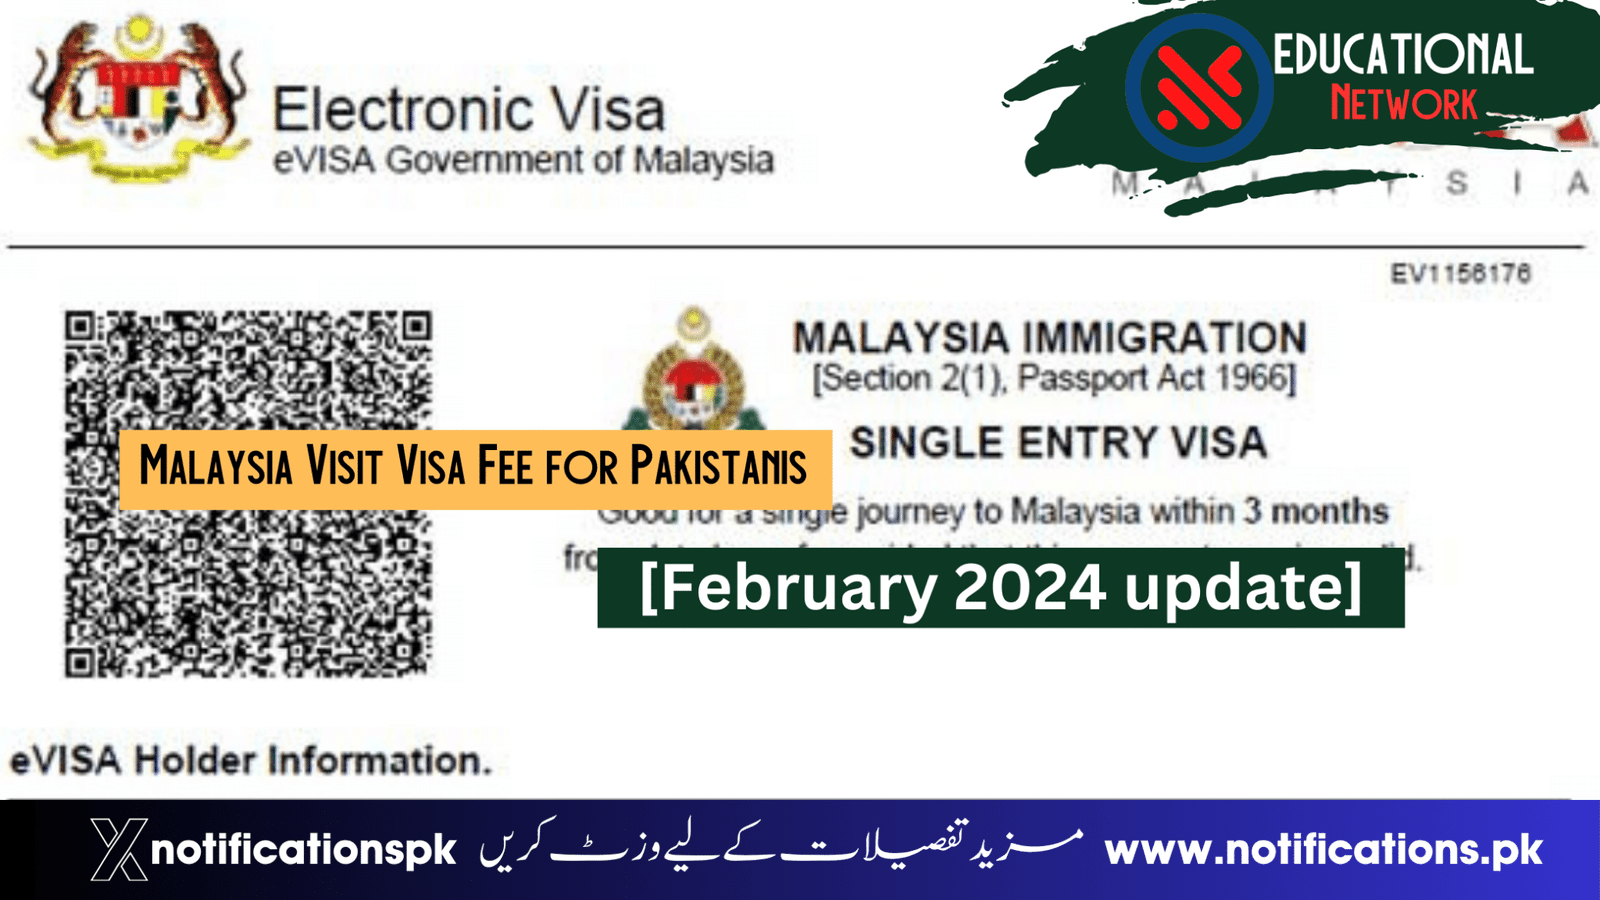 Malaysia Visit Visa Fee for Pakistanis [February 2024 update]